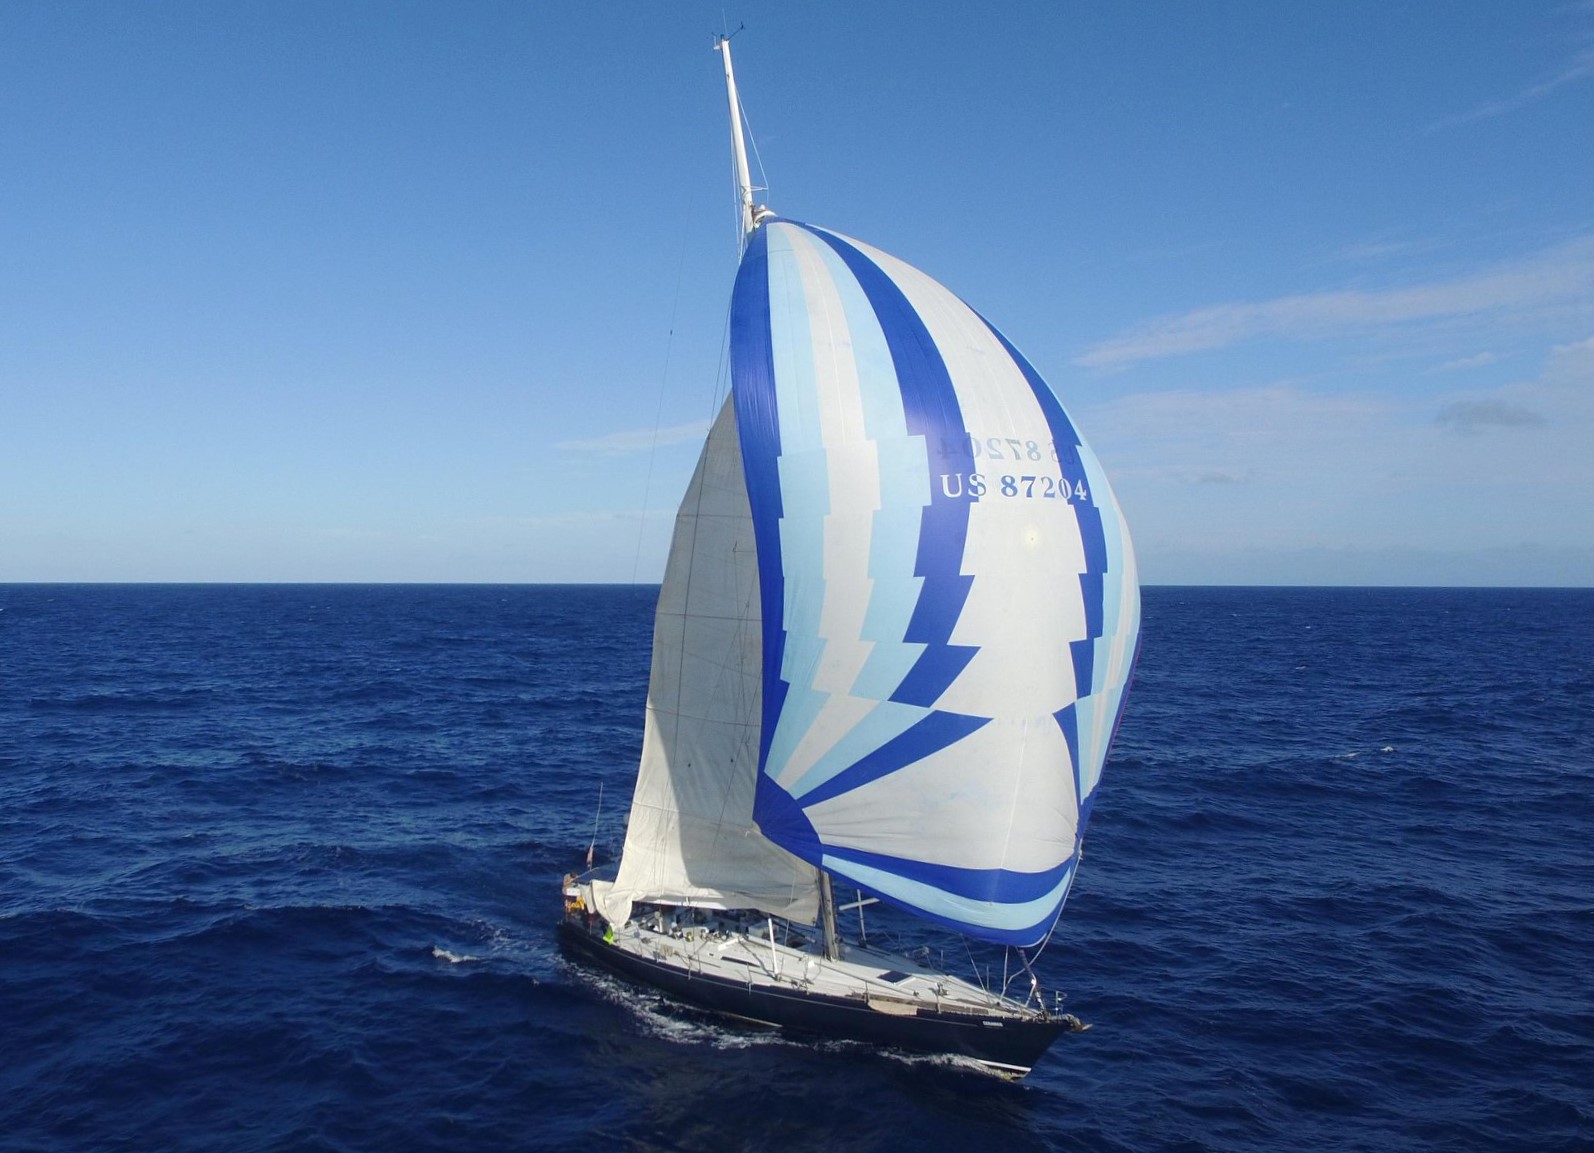 ceramco new zealand yacht